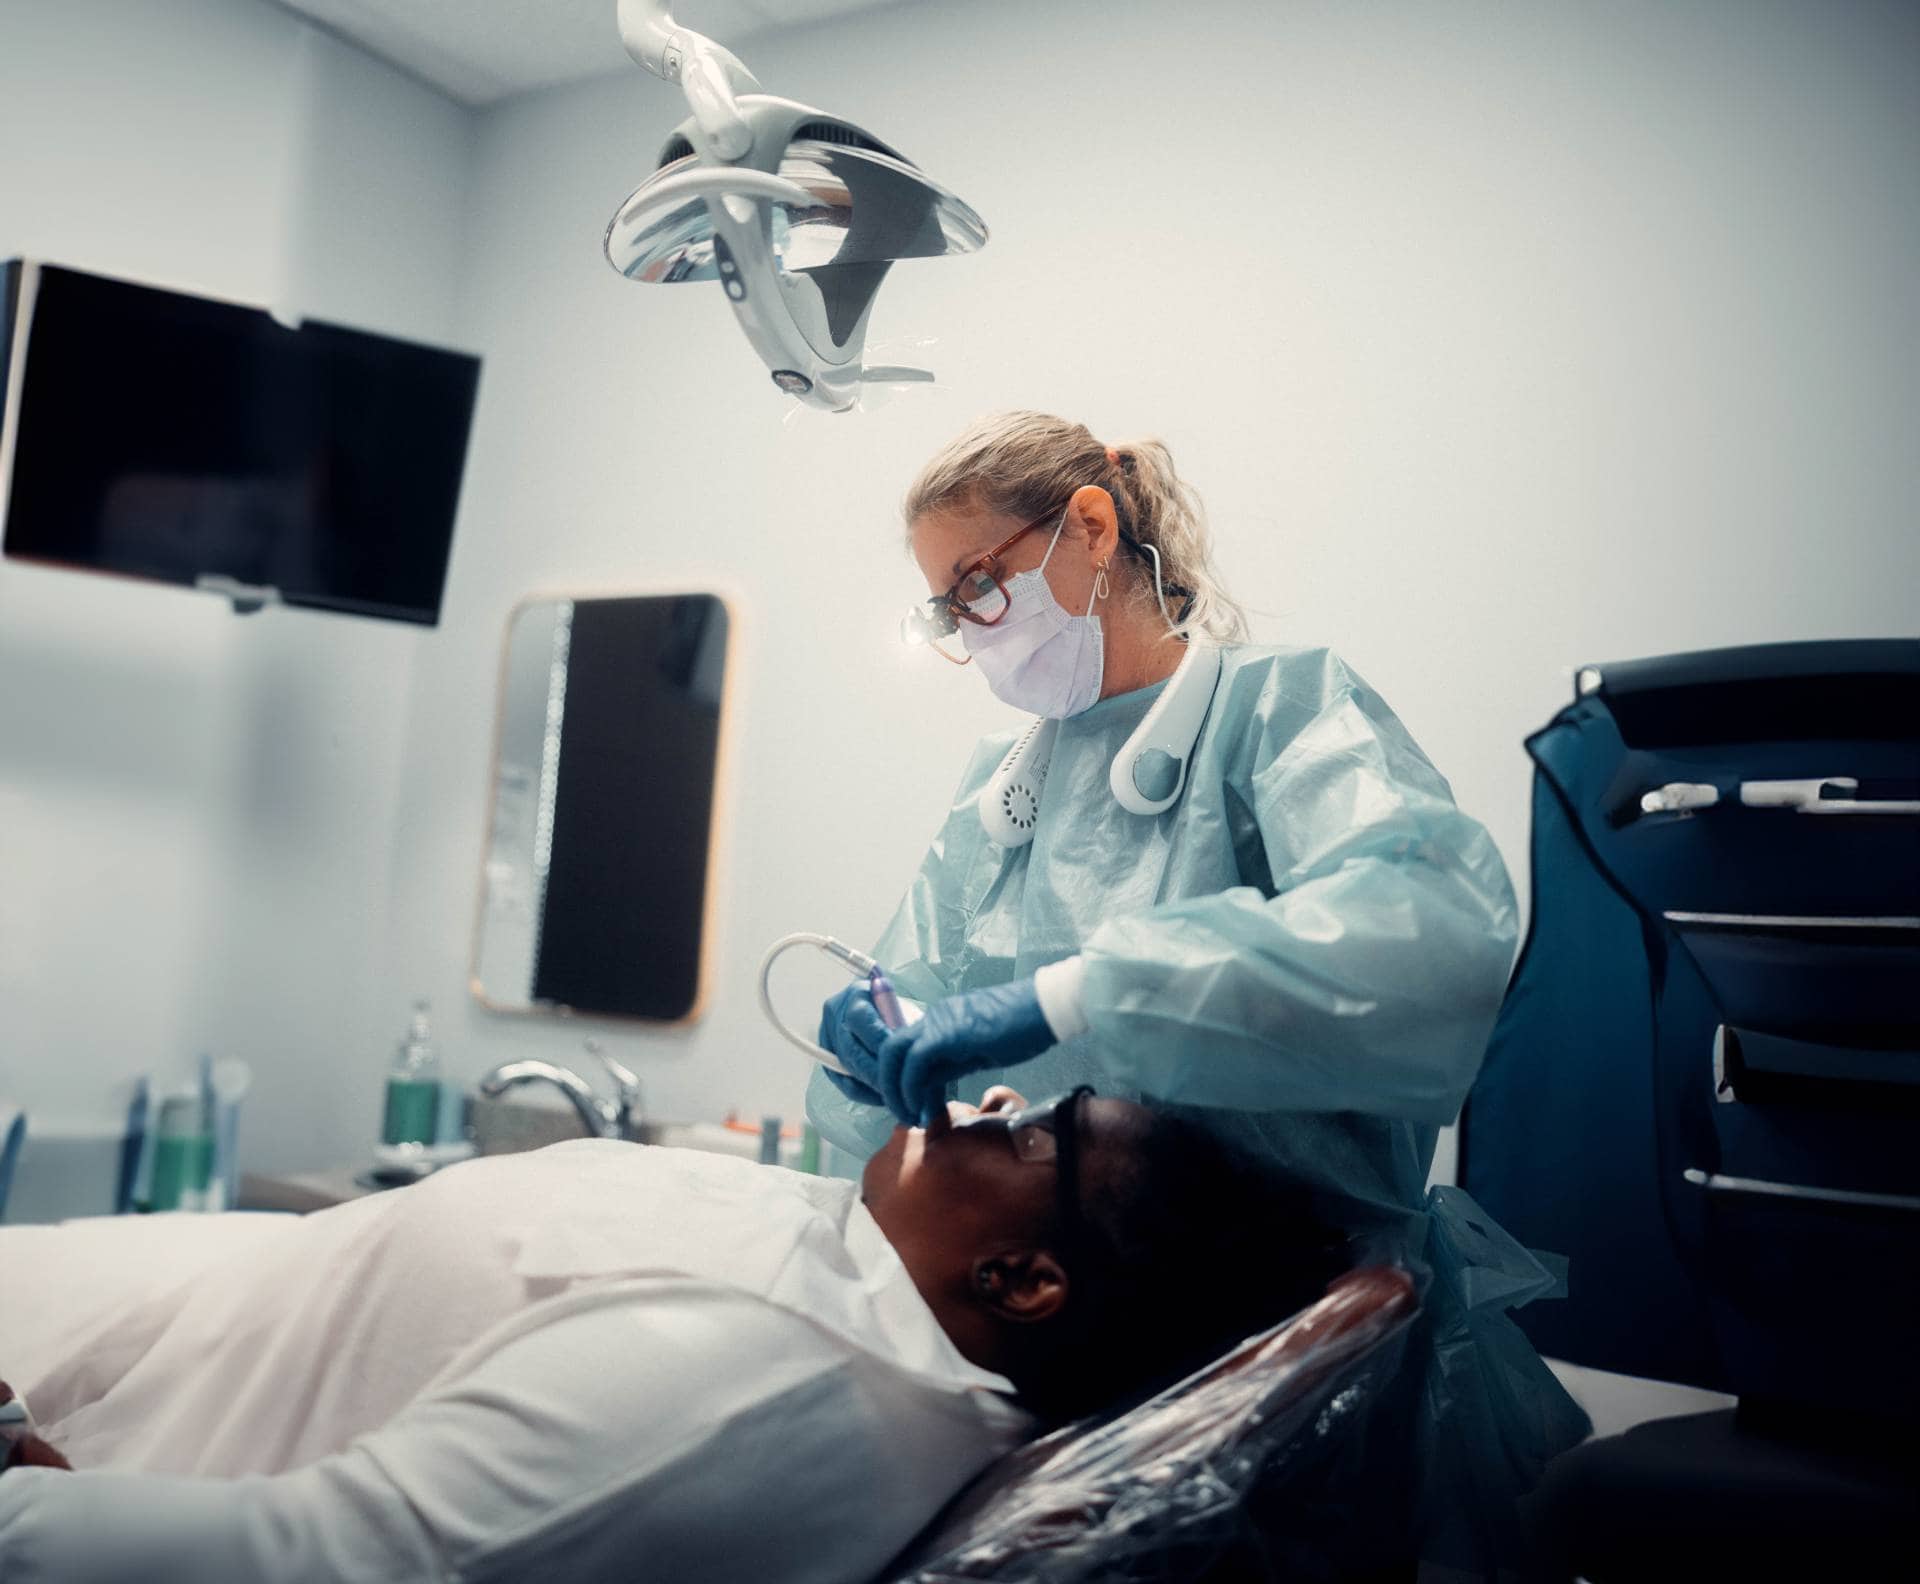 Orthodontist examining patient's teeth